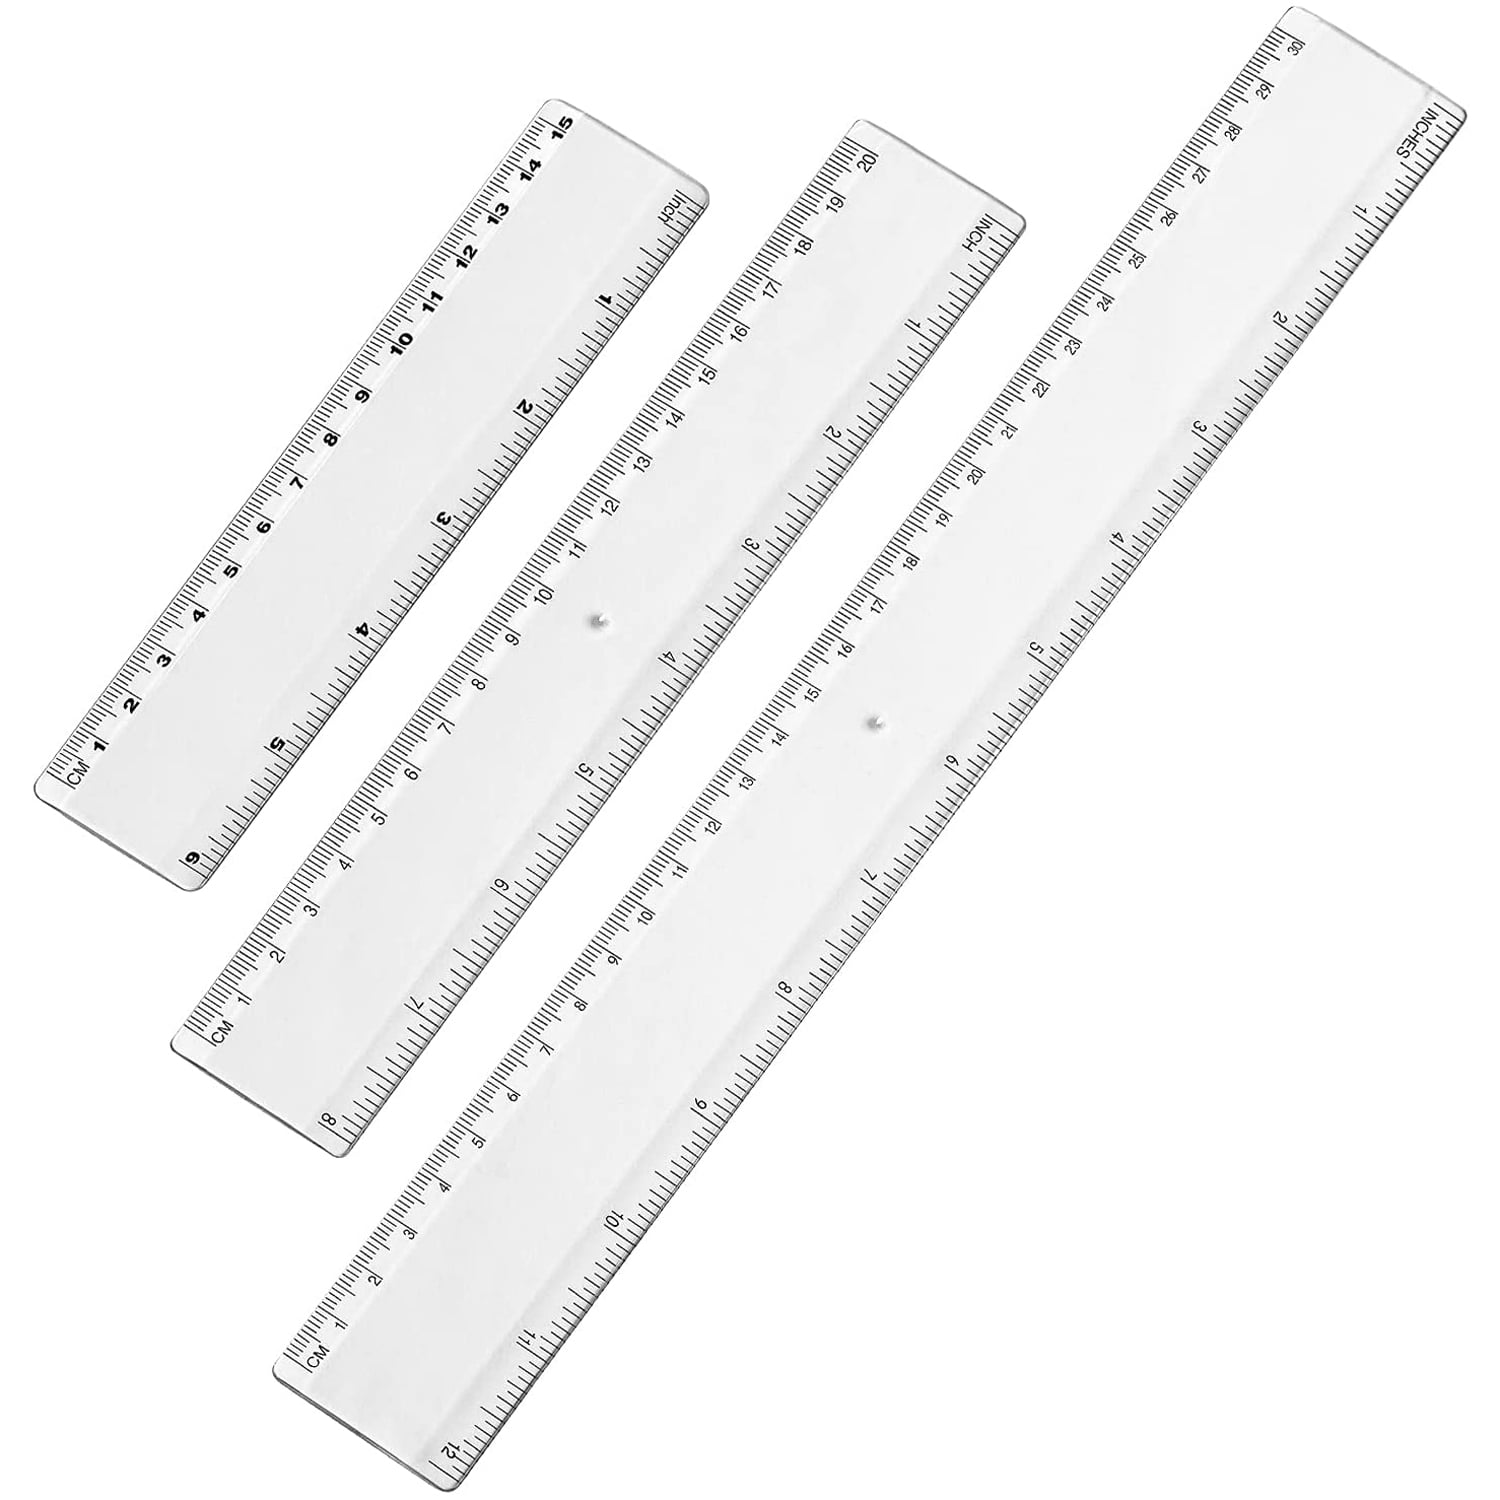 Basics 12-Inch Plastic Ruler with Finger Grip 4-Pack 